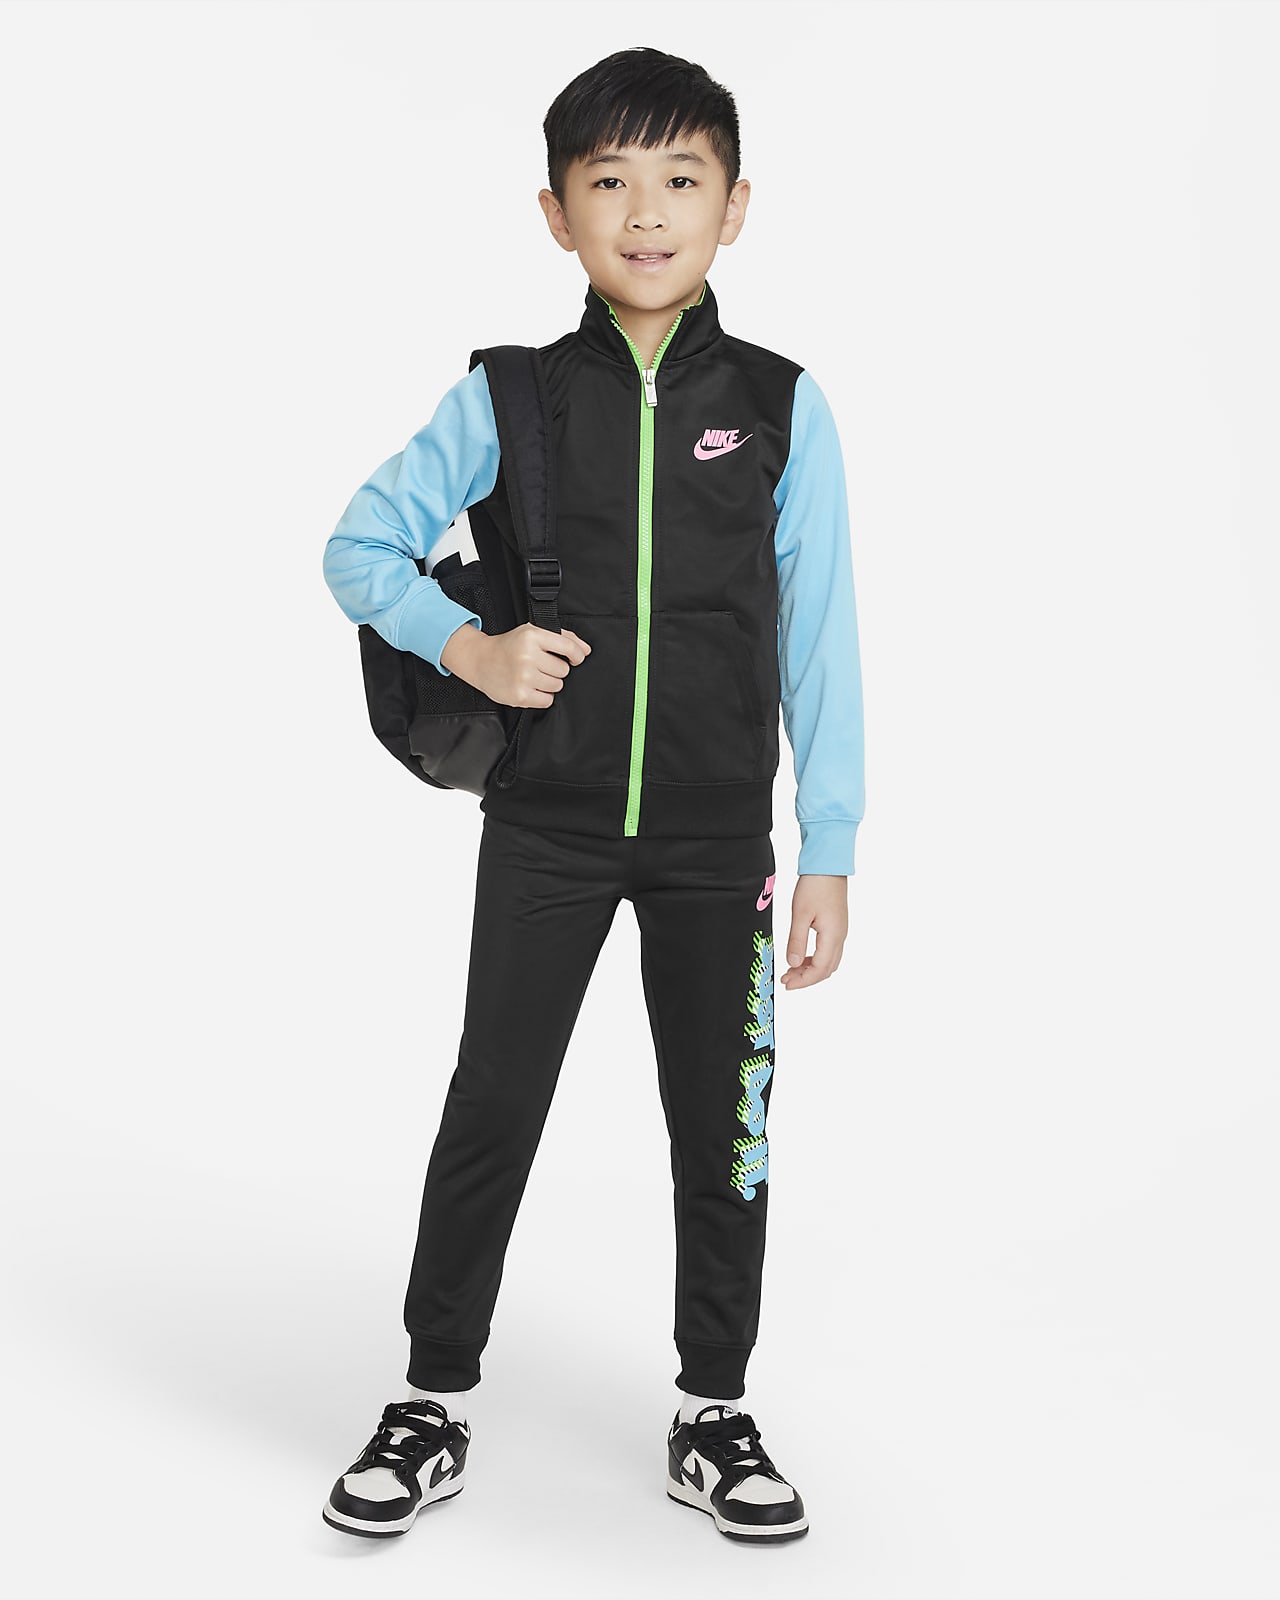 Nike Active Joy Tricot Set Chándal - Niño/a pequeño/a